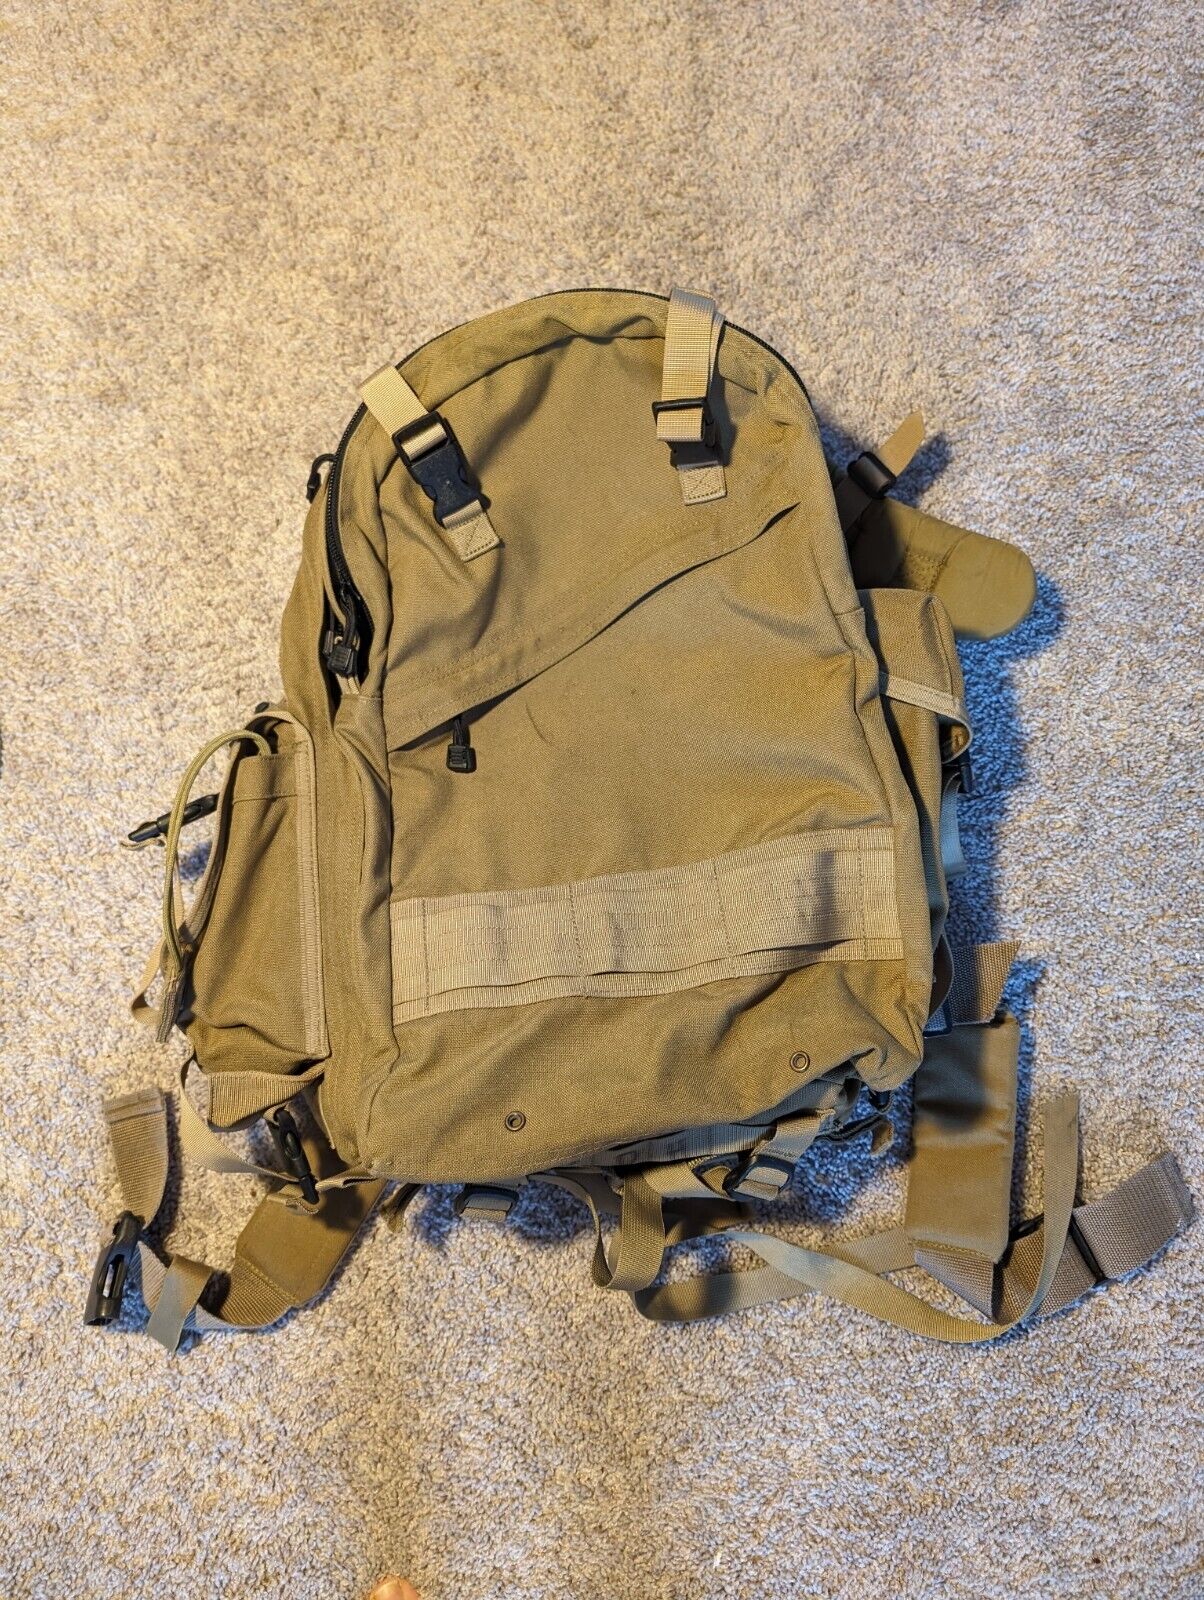 BLACKHAWK olgen military desert tan 3-days assault pack tacktical jump backpack